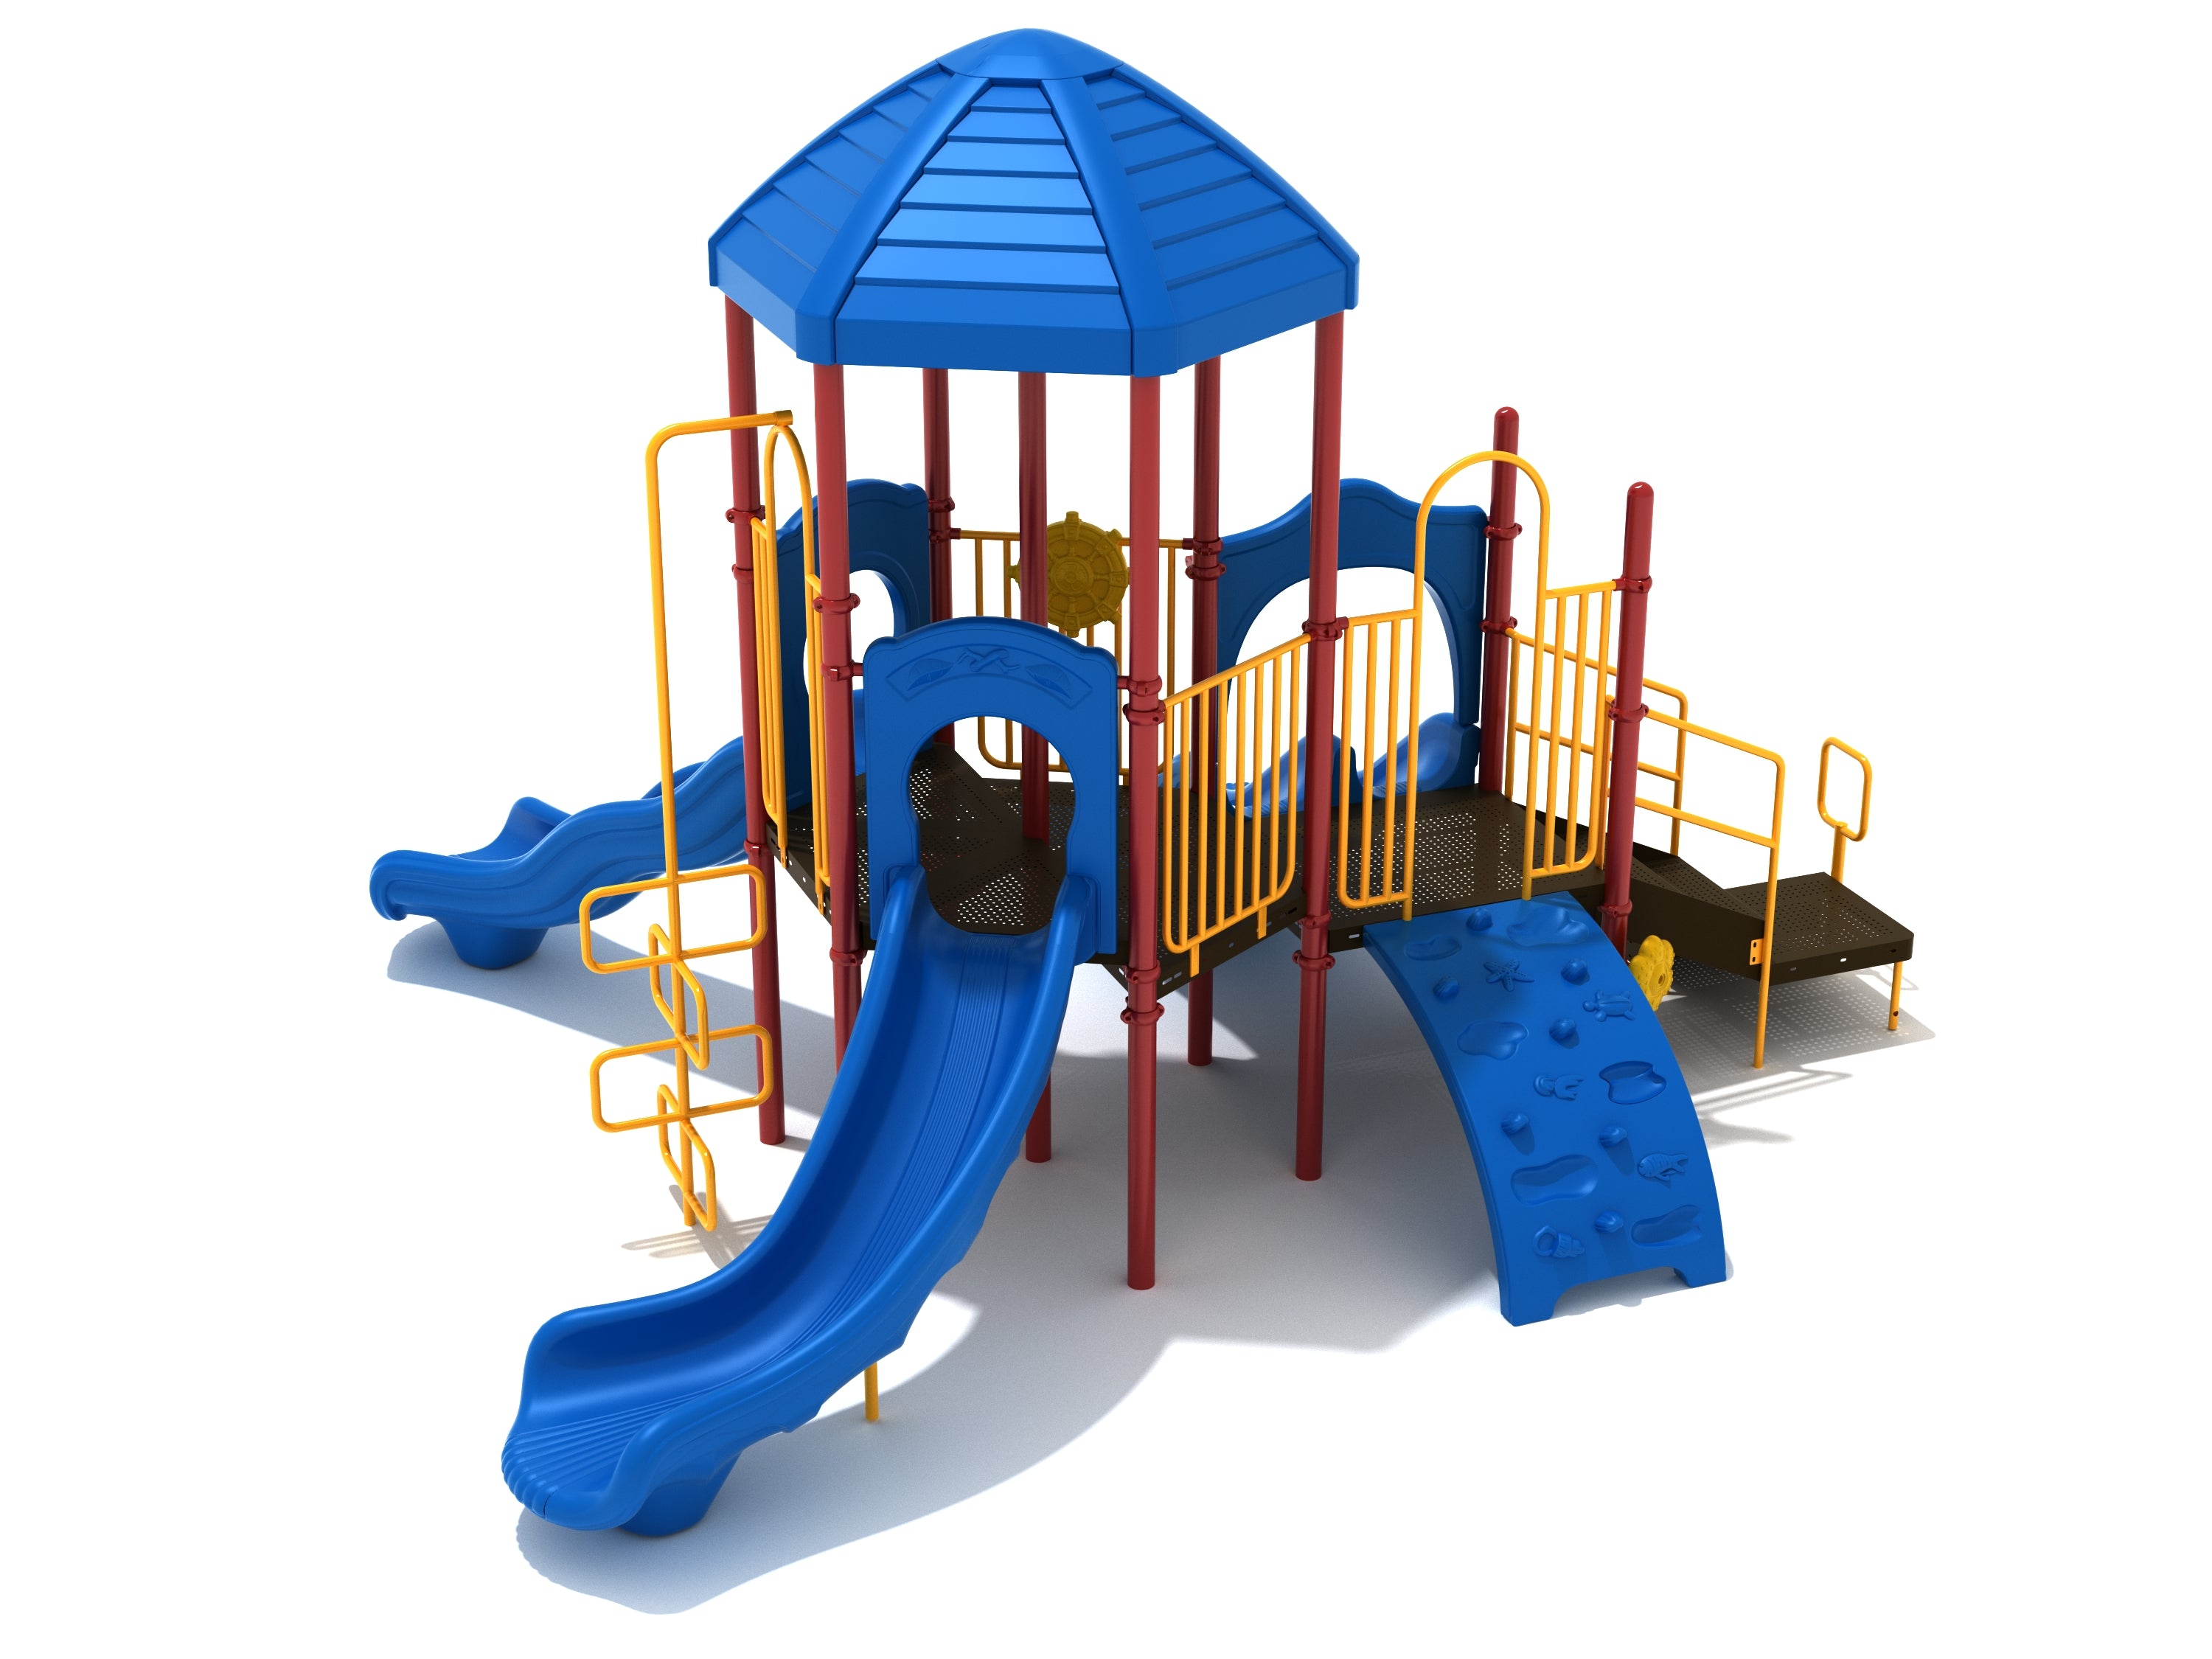 Rockford Playground Primary Colors